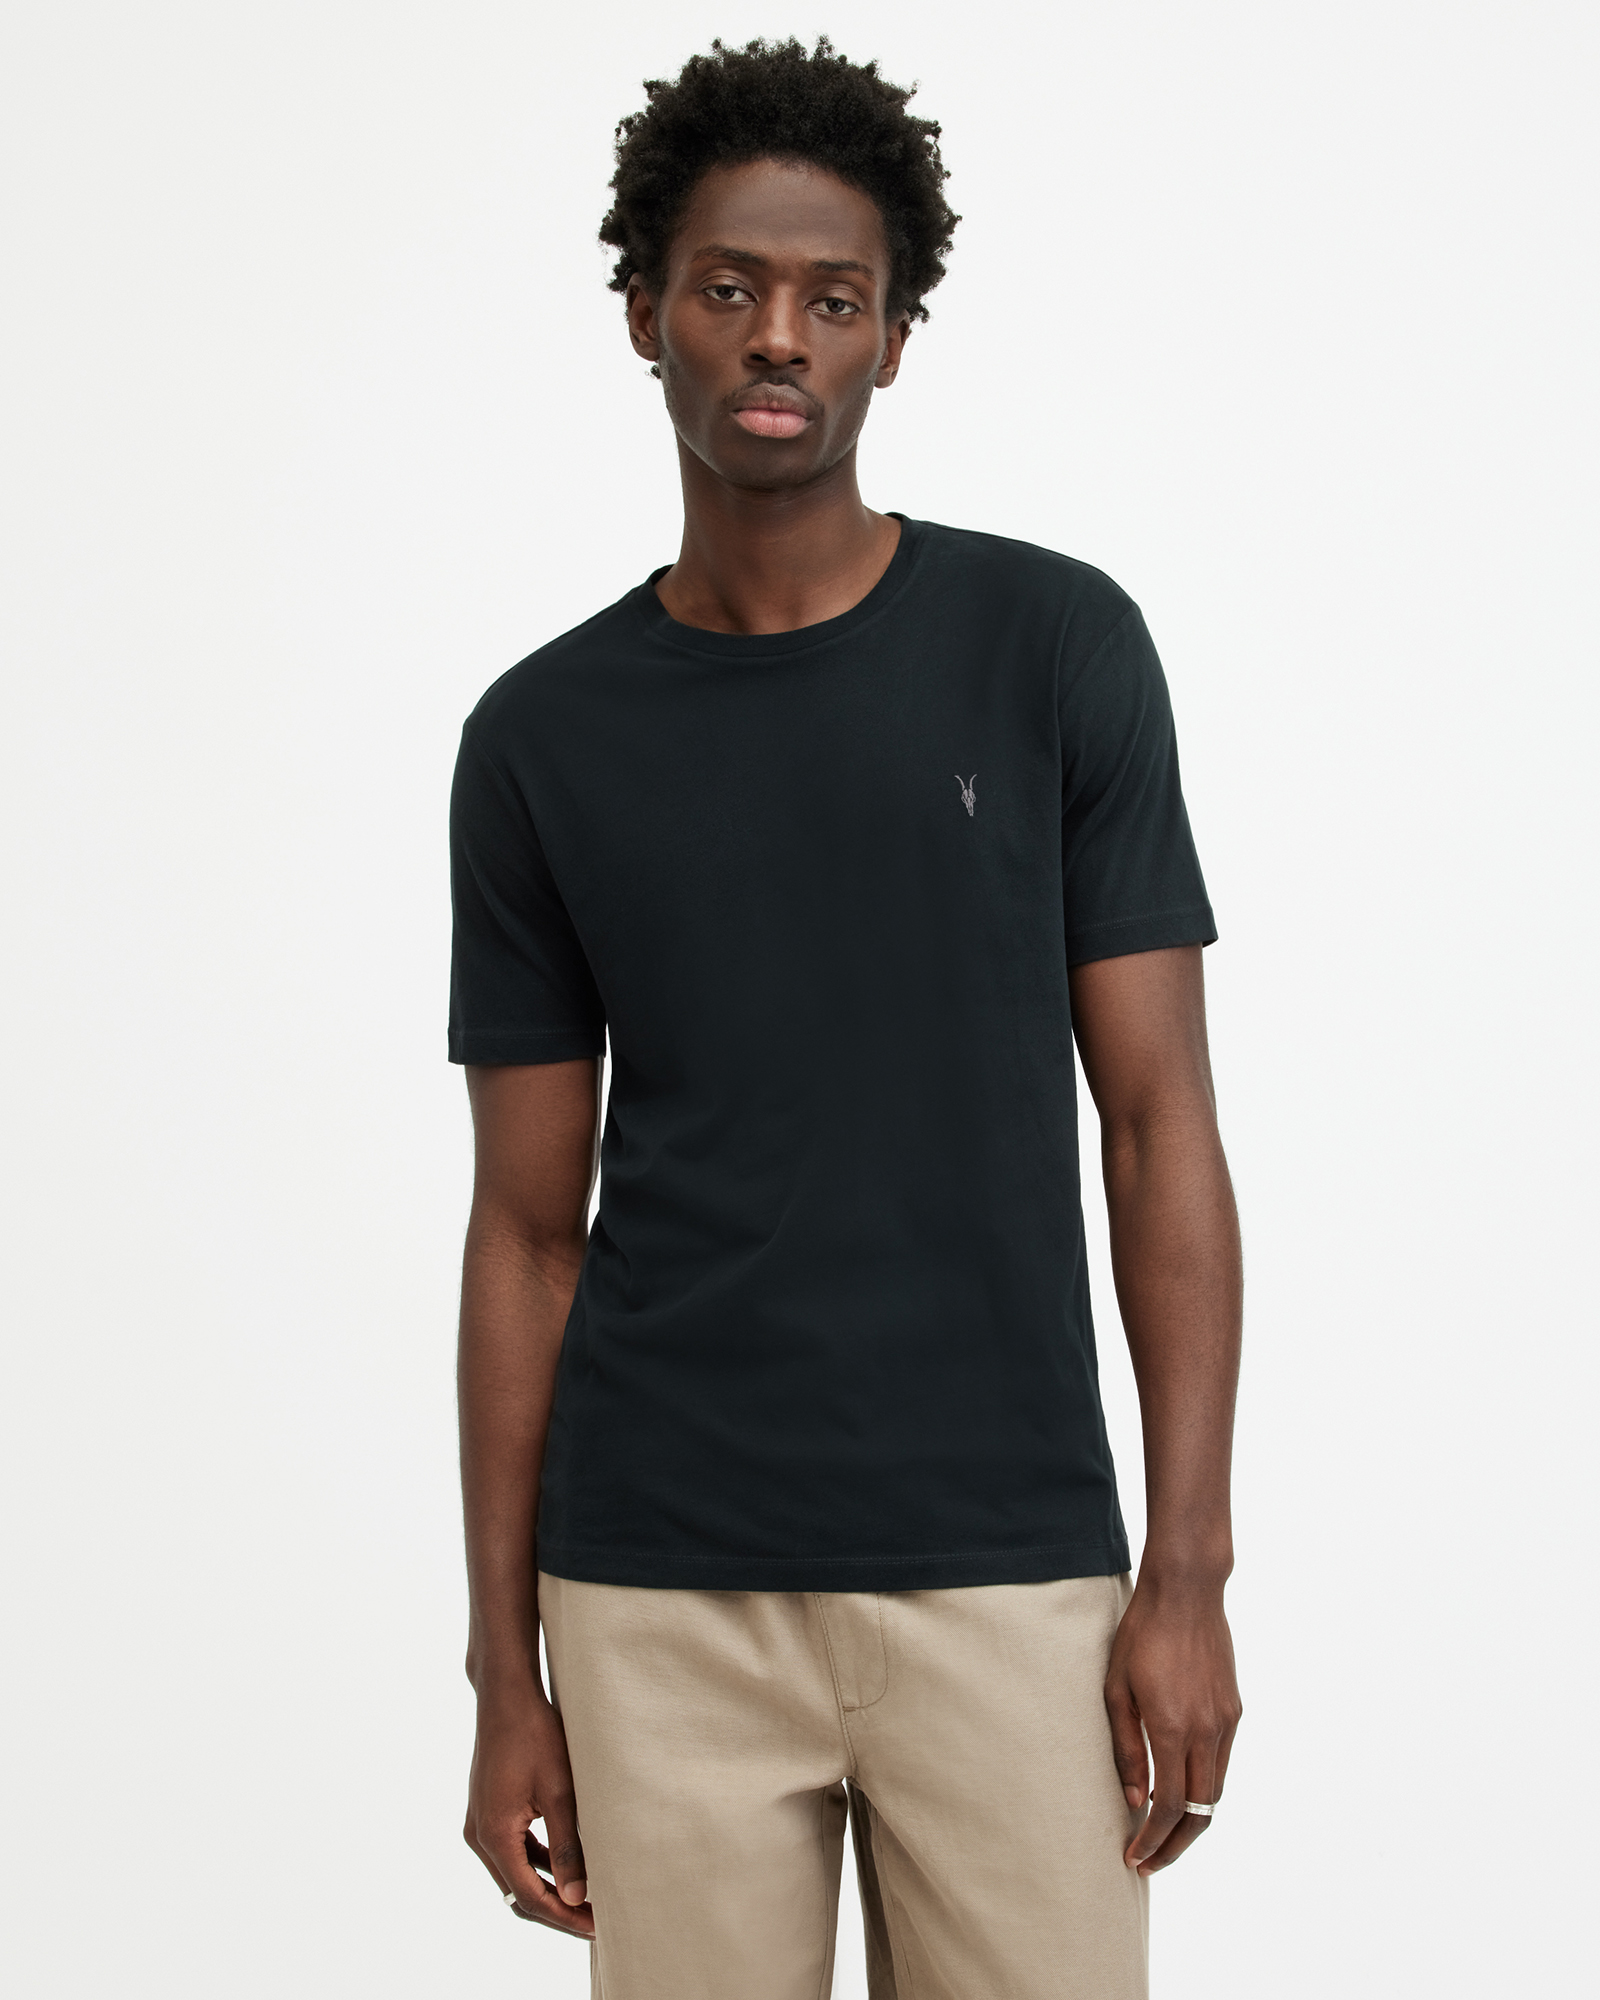 AllSaints Men's Cotton Regular Fit Brace Tonic Short Sleeve Crew T-Shirt, Black